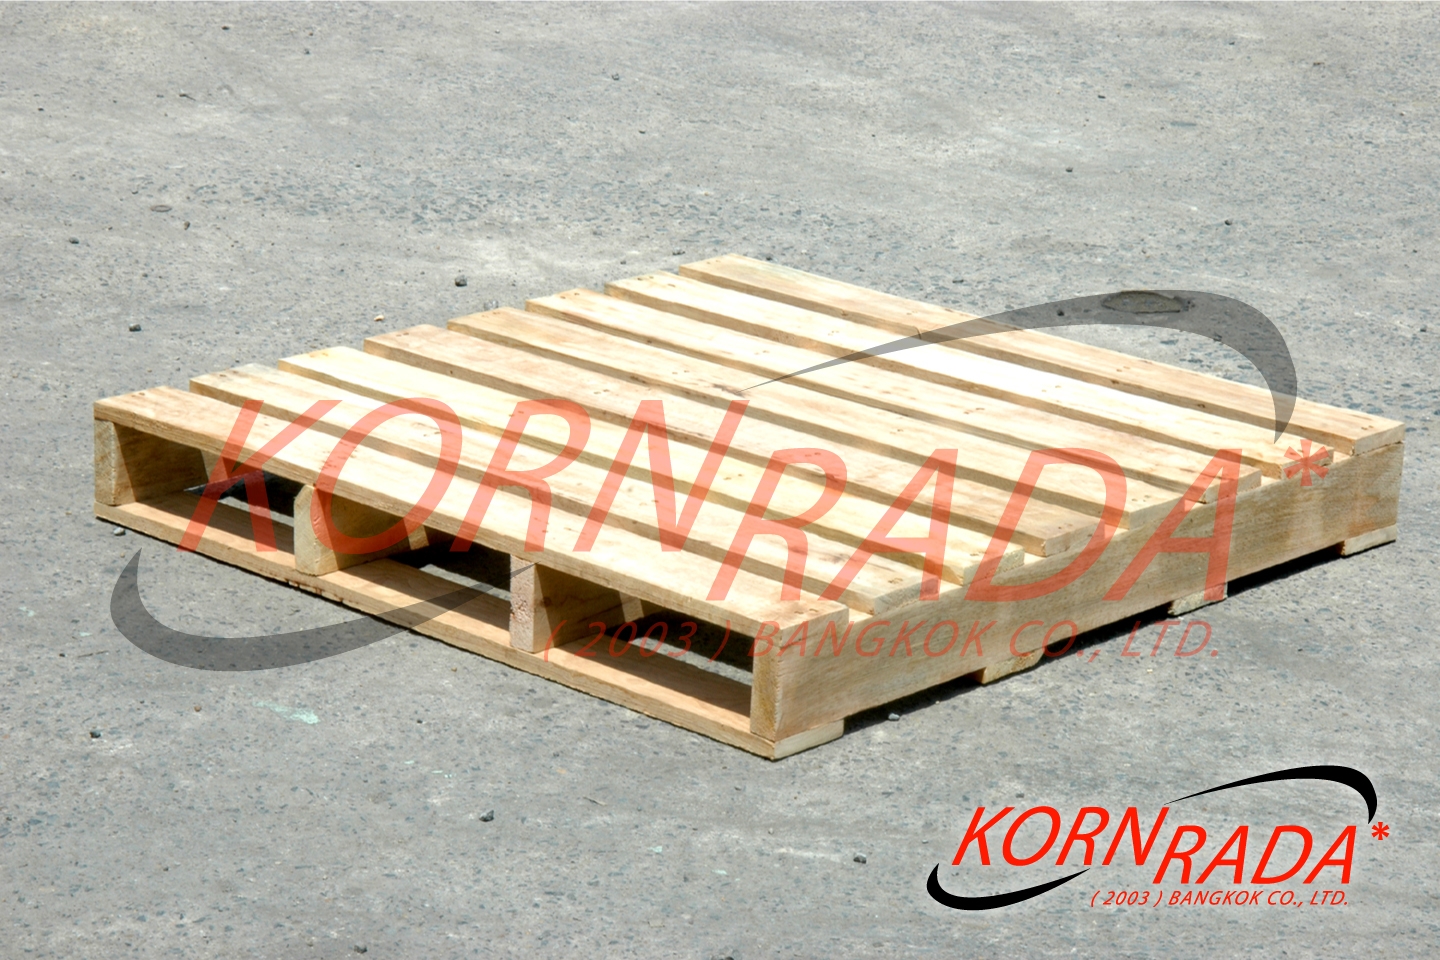 kornrada_wooden-pallet_4-stringers_005